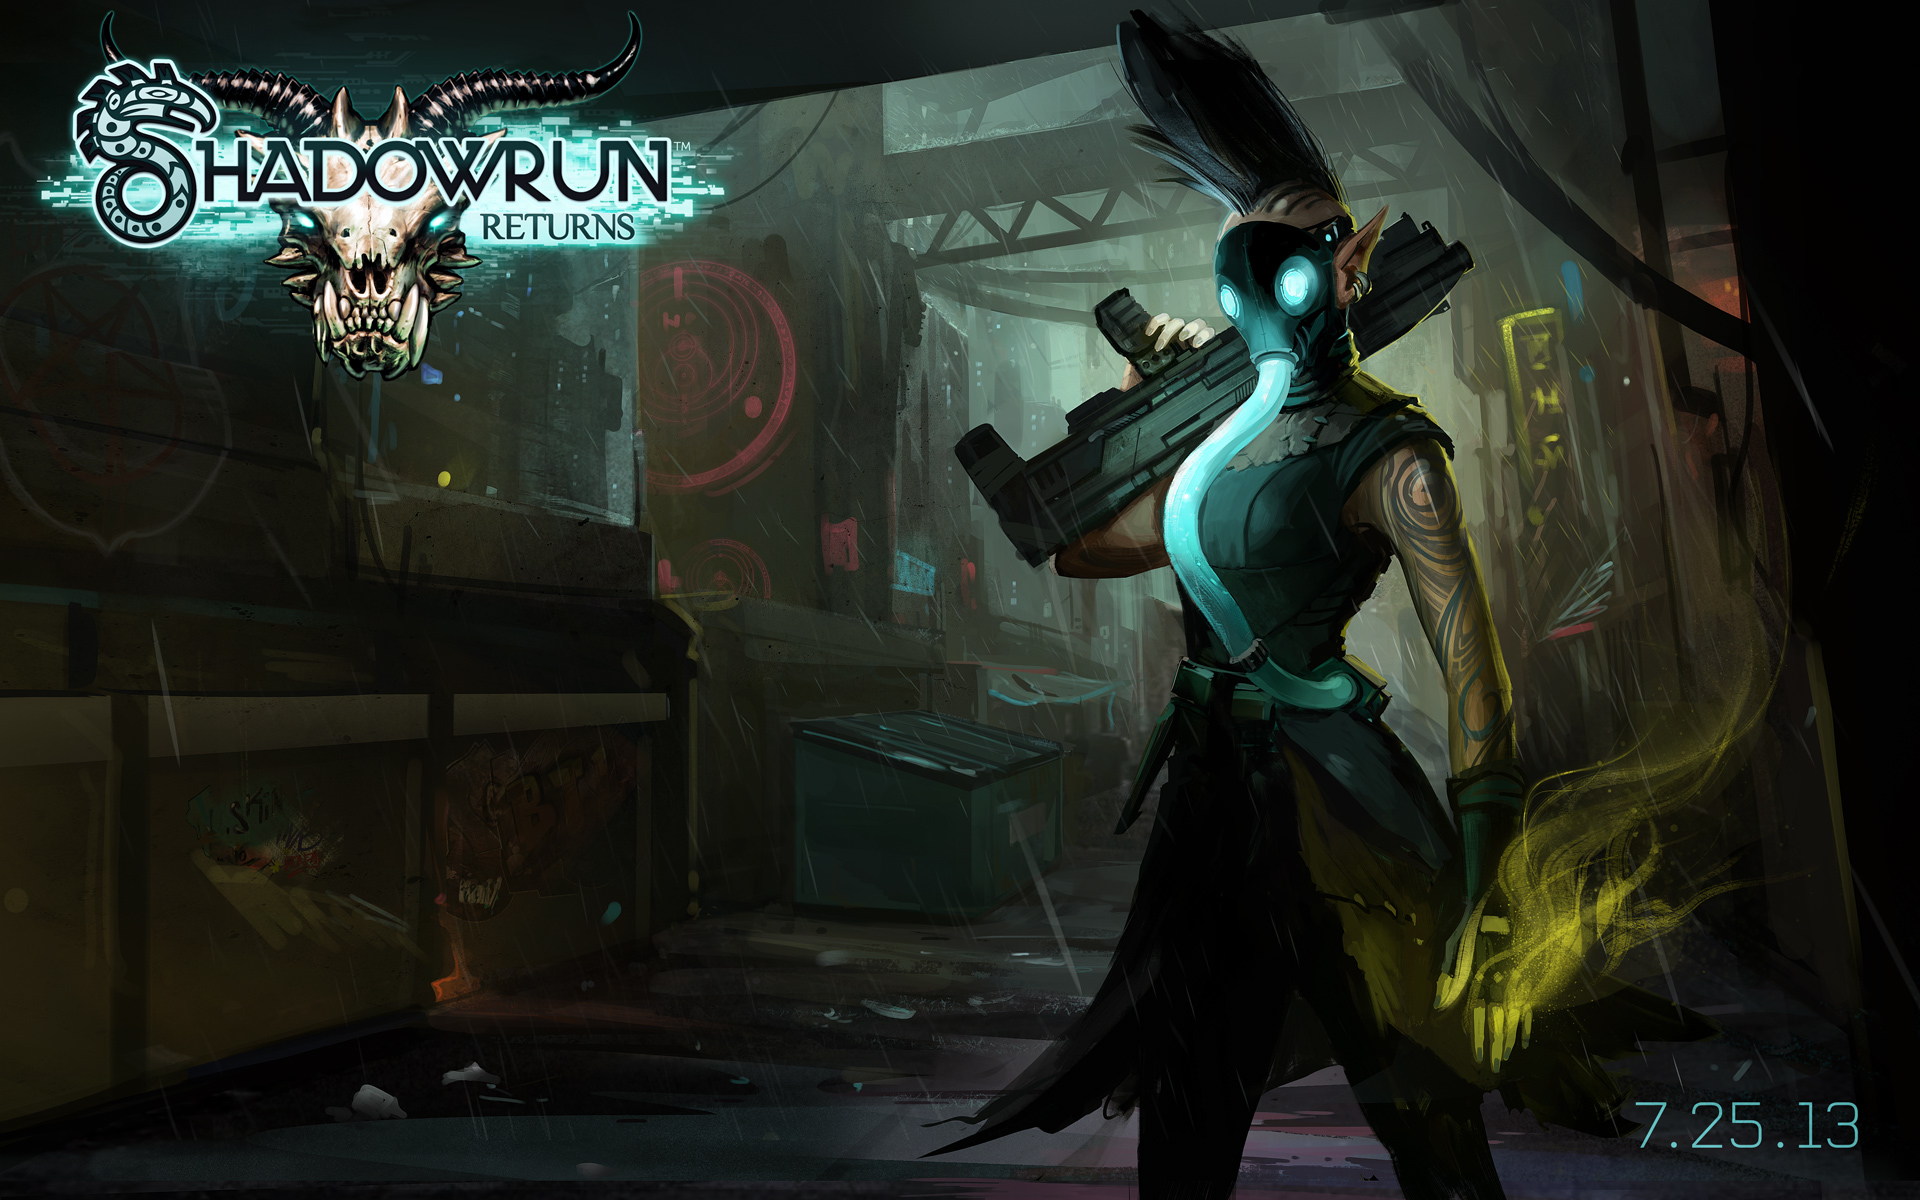 shadowrun returns - Ohadowrun Returns 7.25.13